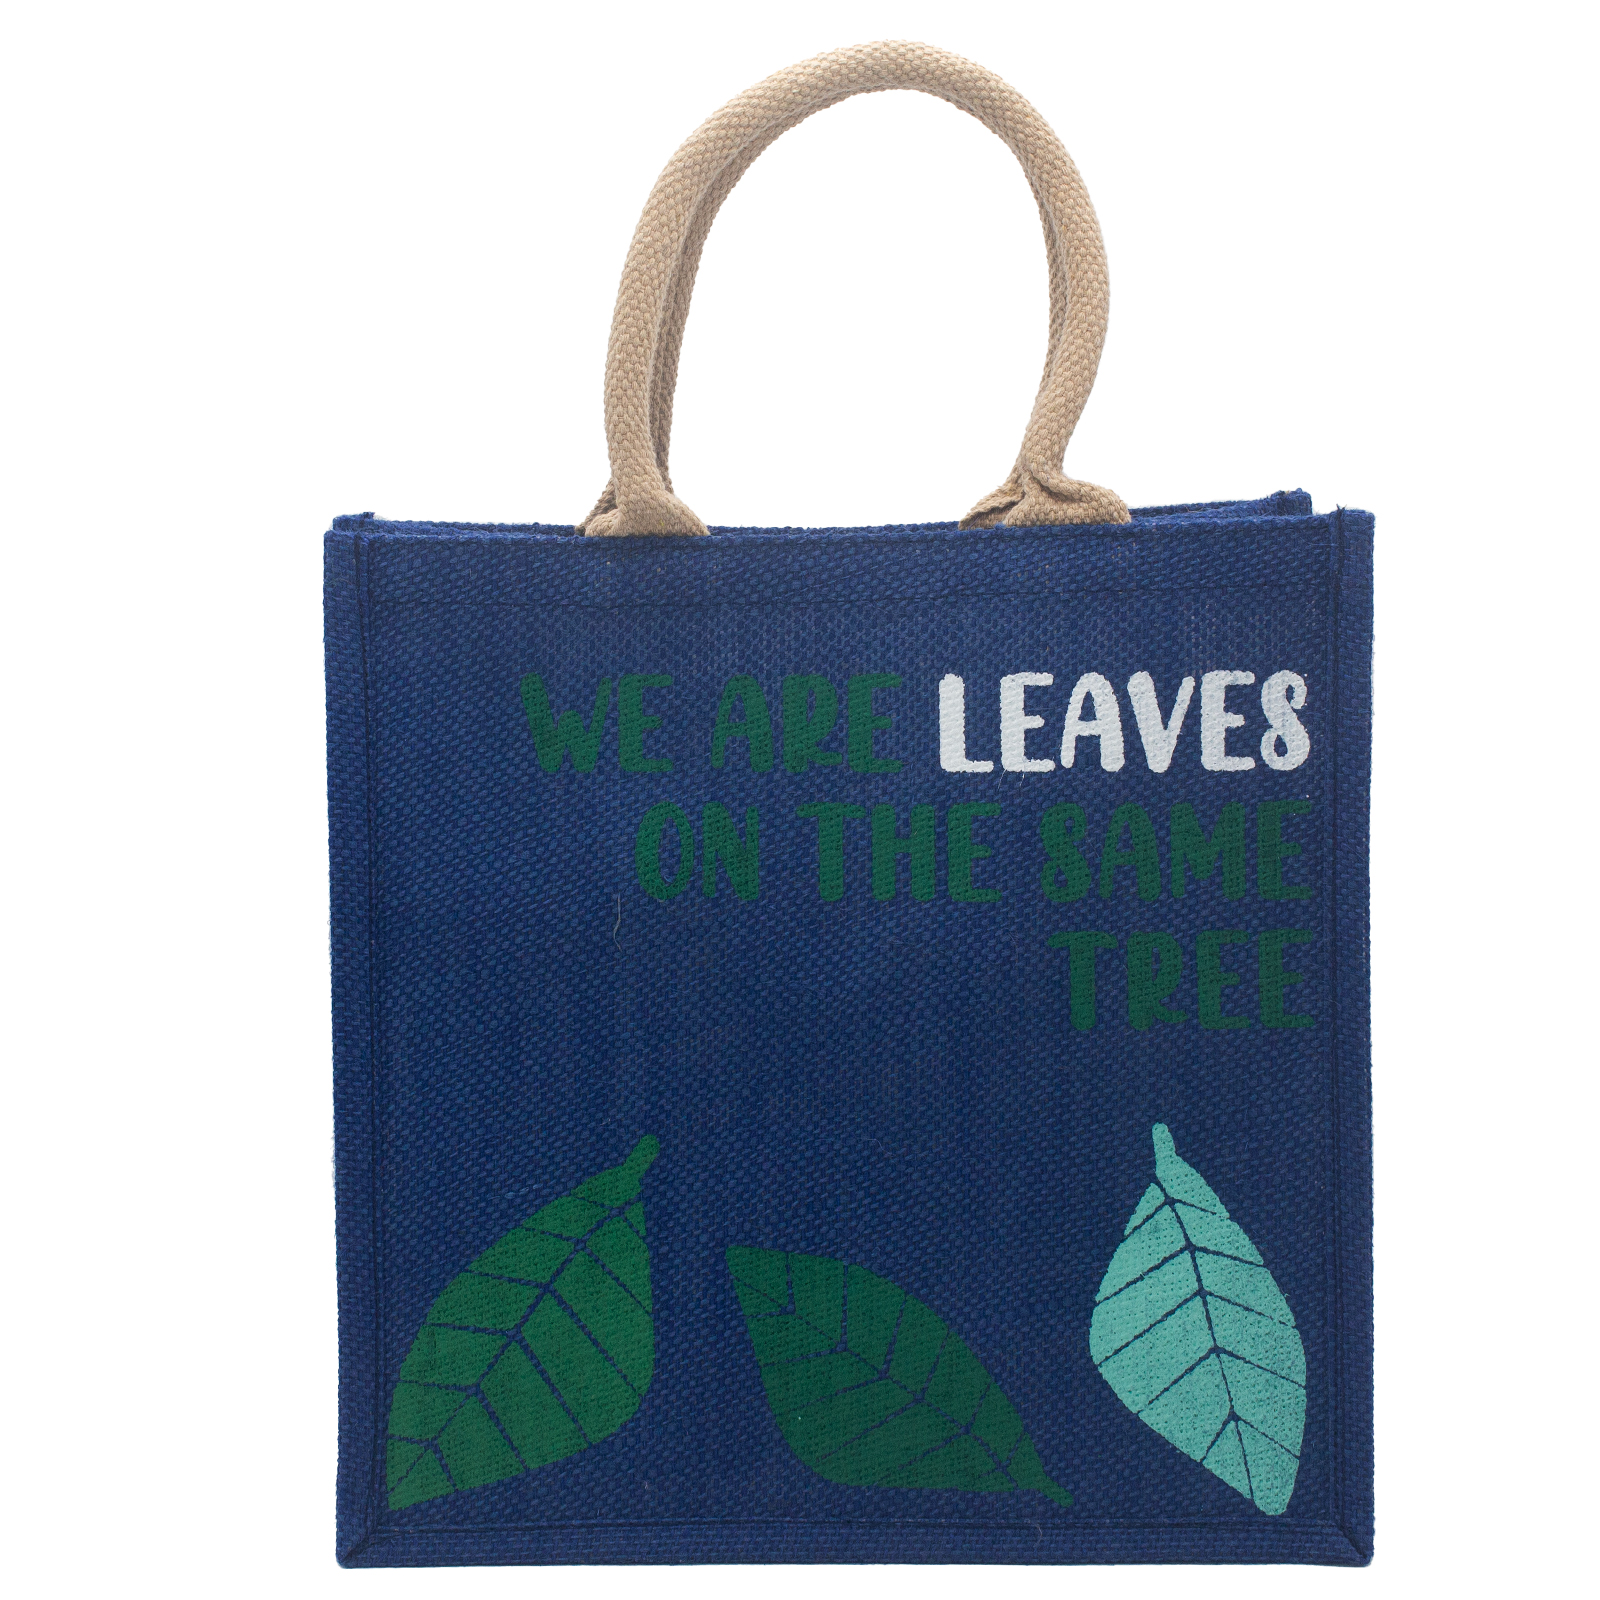 Printed Jute Bag - We are Leaves - Blue - PJB-02B